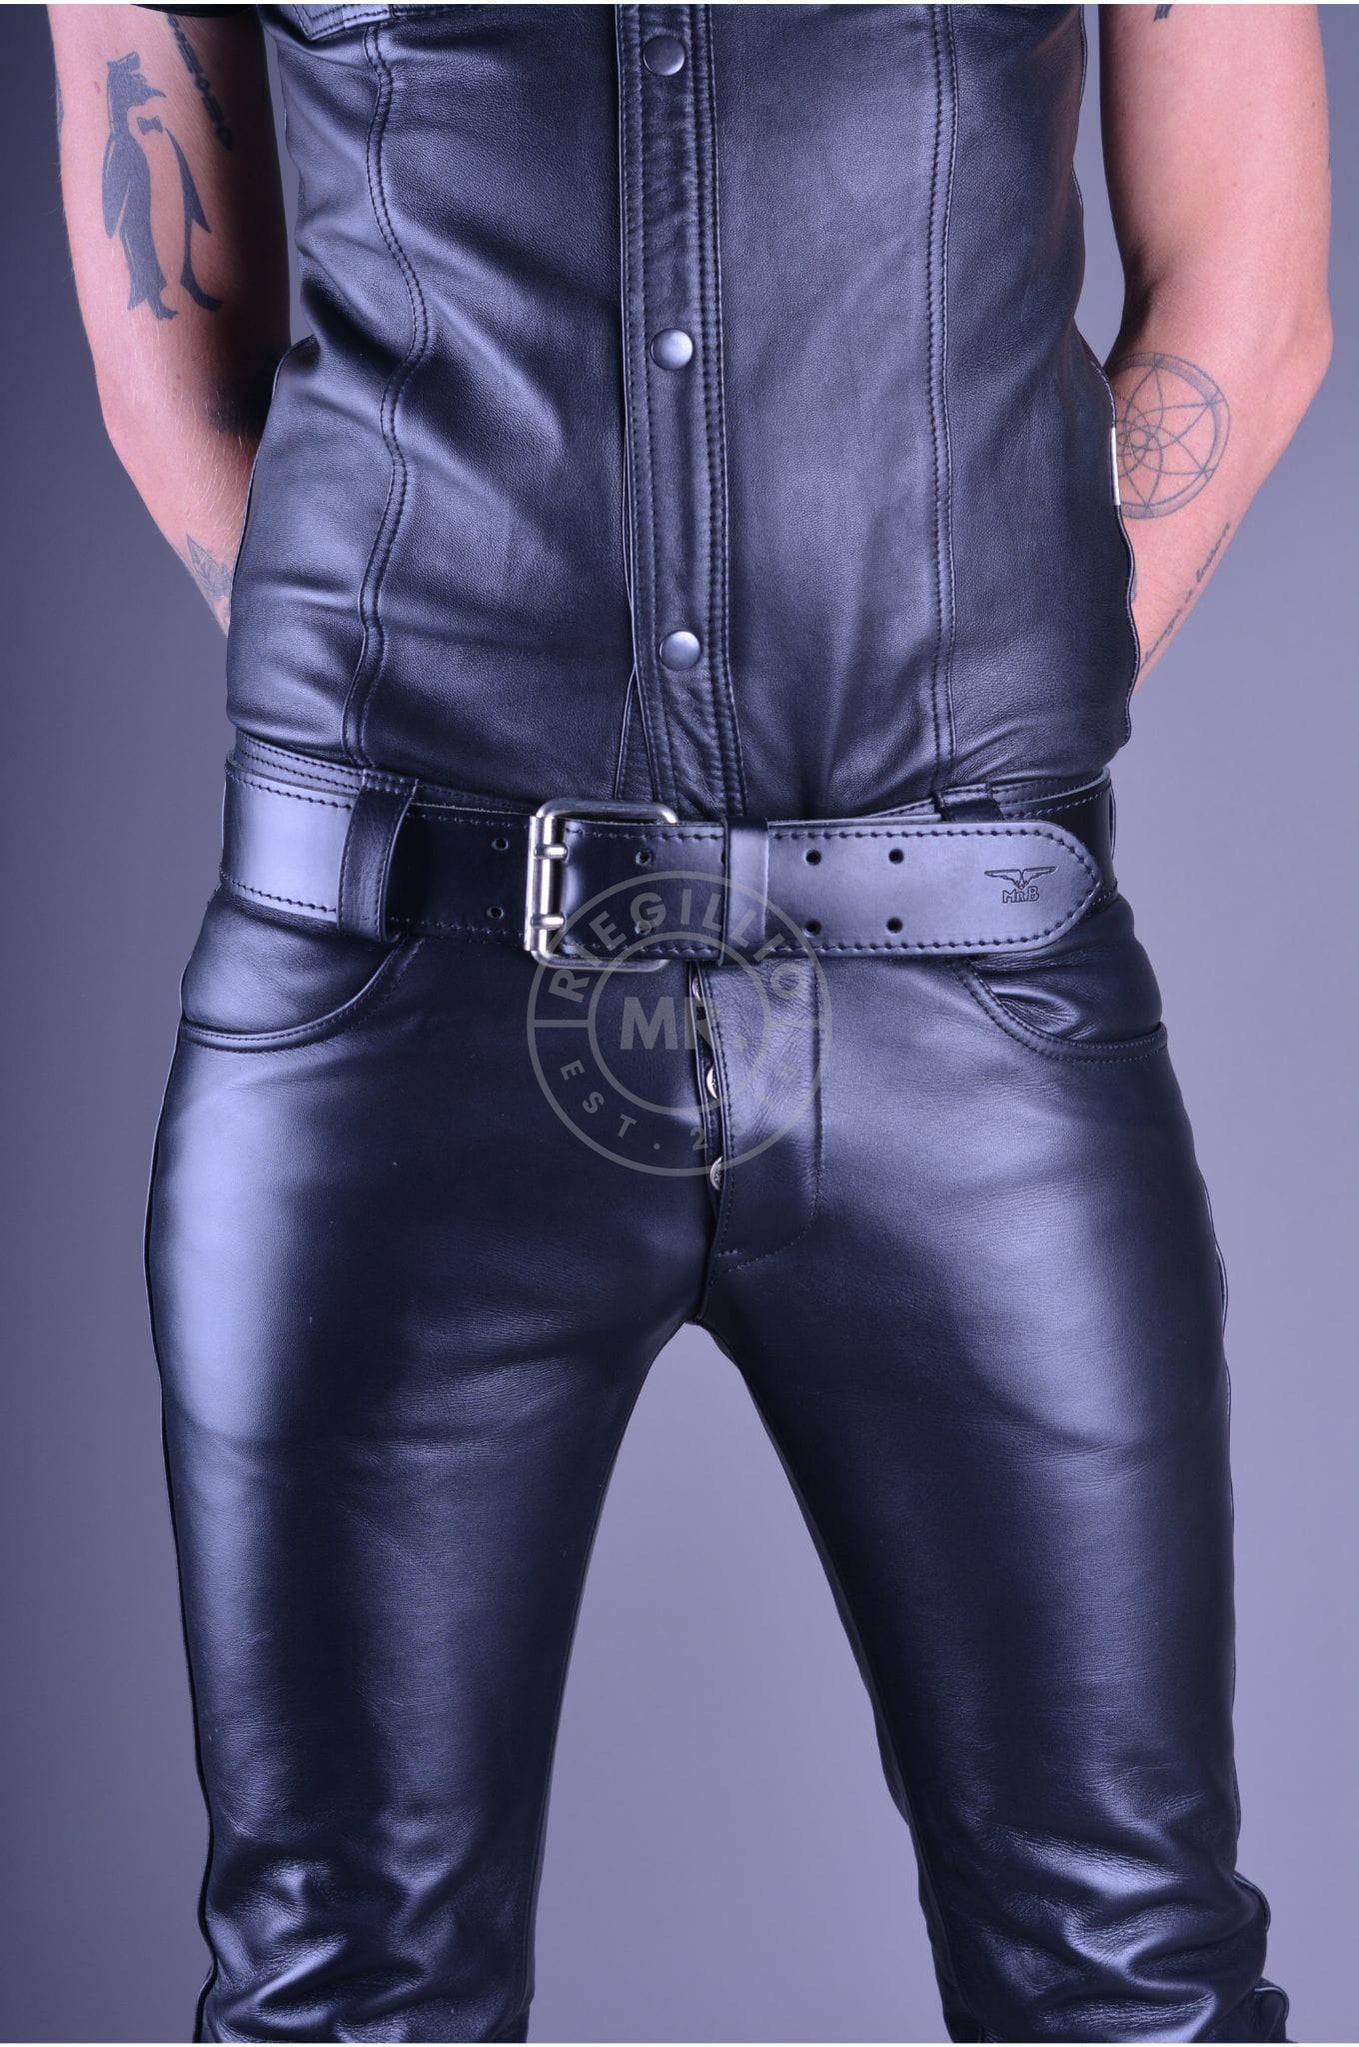 Mister B Leather Belt Stitched 5 cm - Black at MR. Riegillio